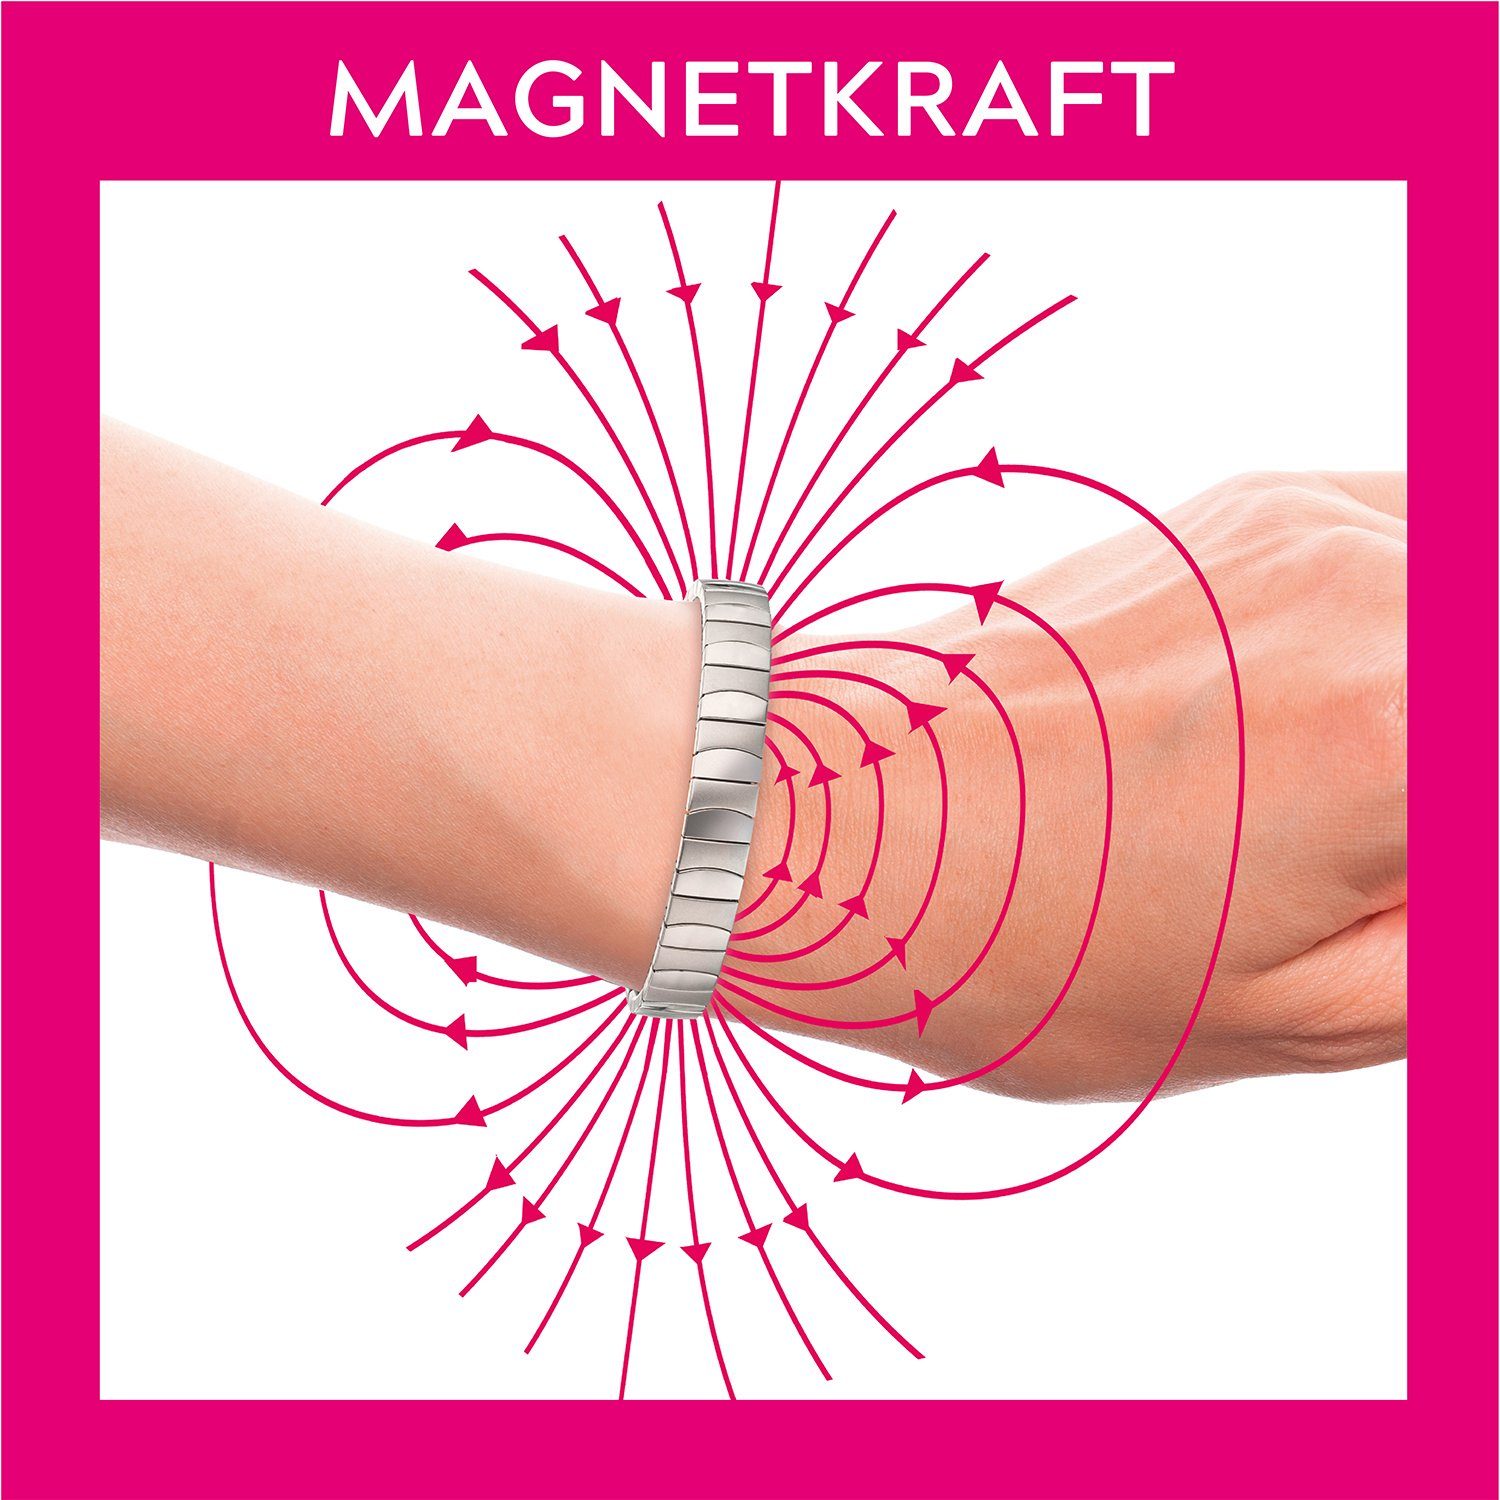 Design MAGNETIX WELLNESS Matt-Glanz Flexi-Magnetarmband Edelstahlarmband